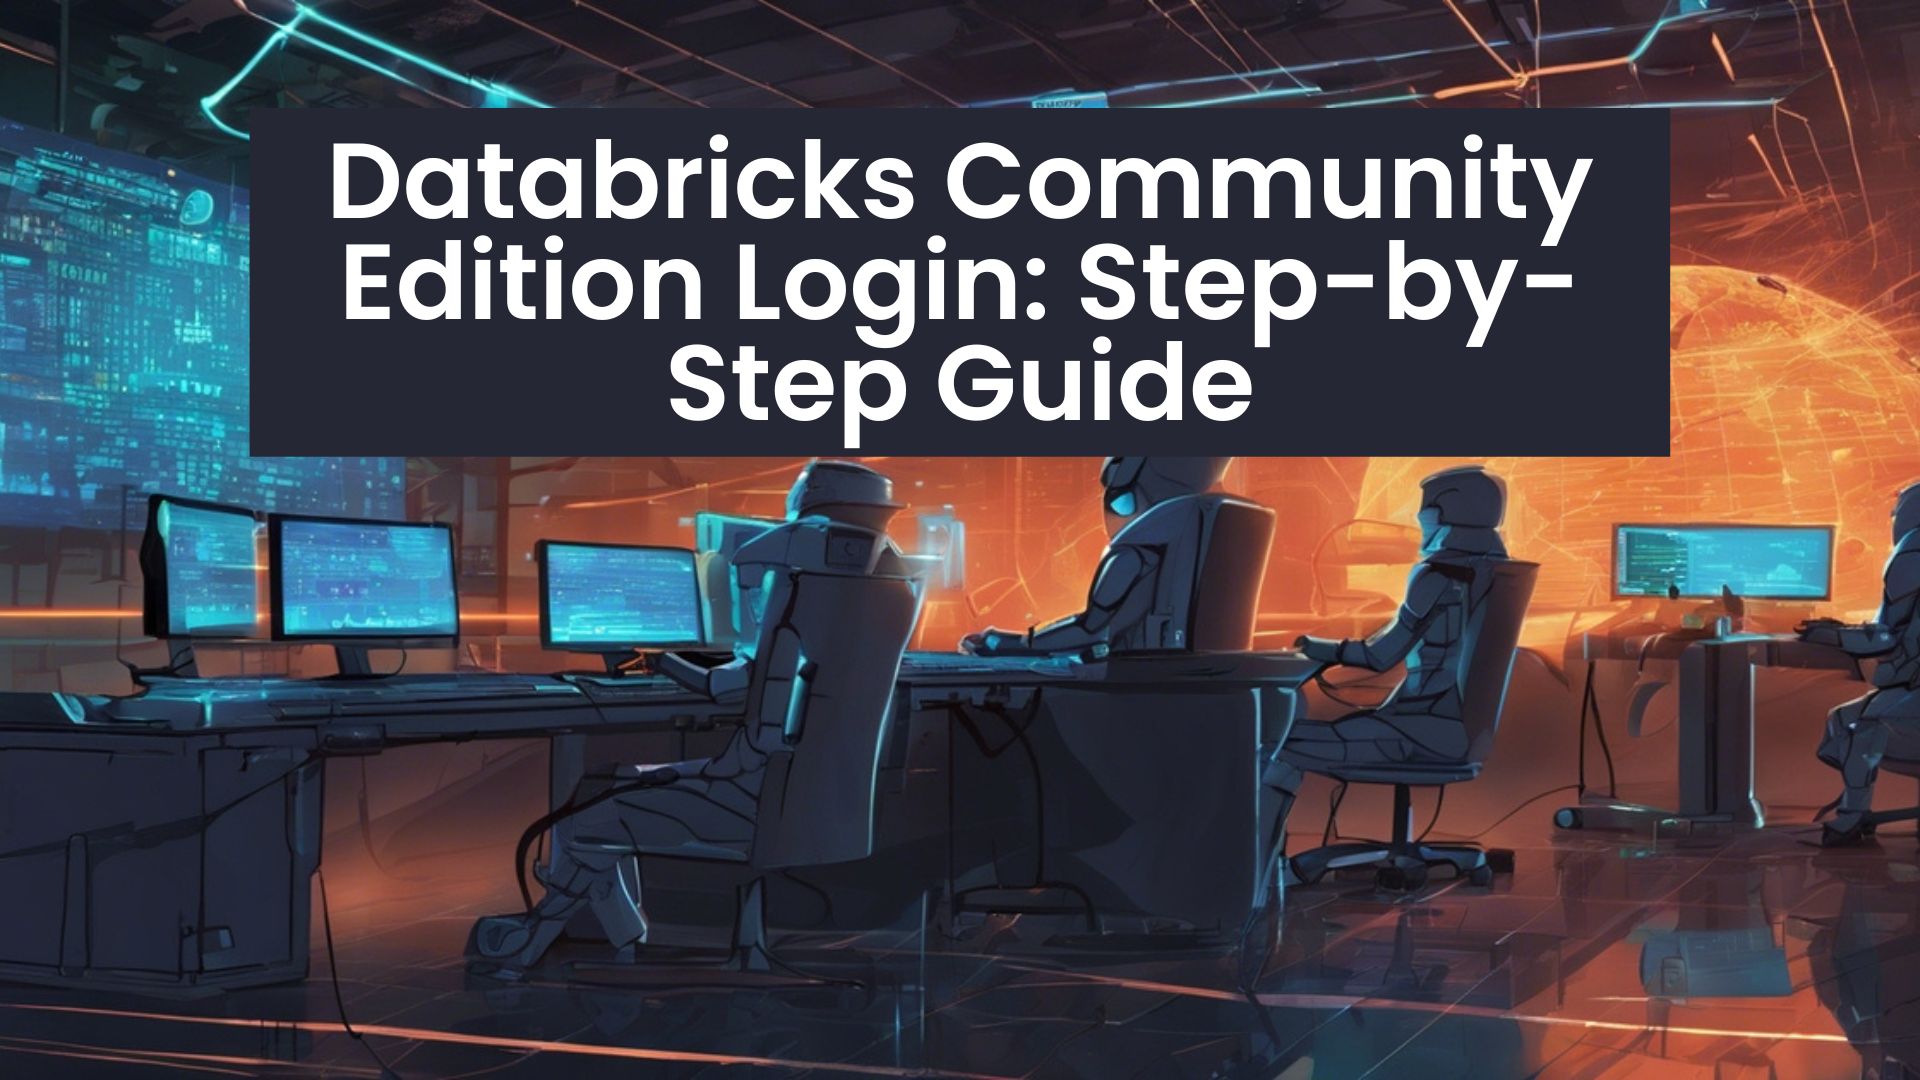 Databricks Community Edition Login Step-by-Step Guide